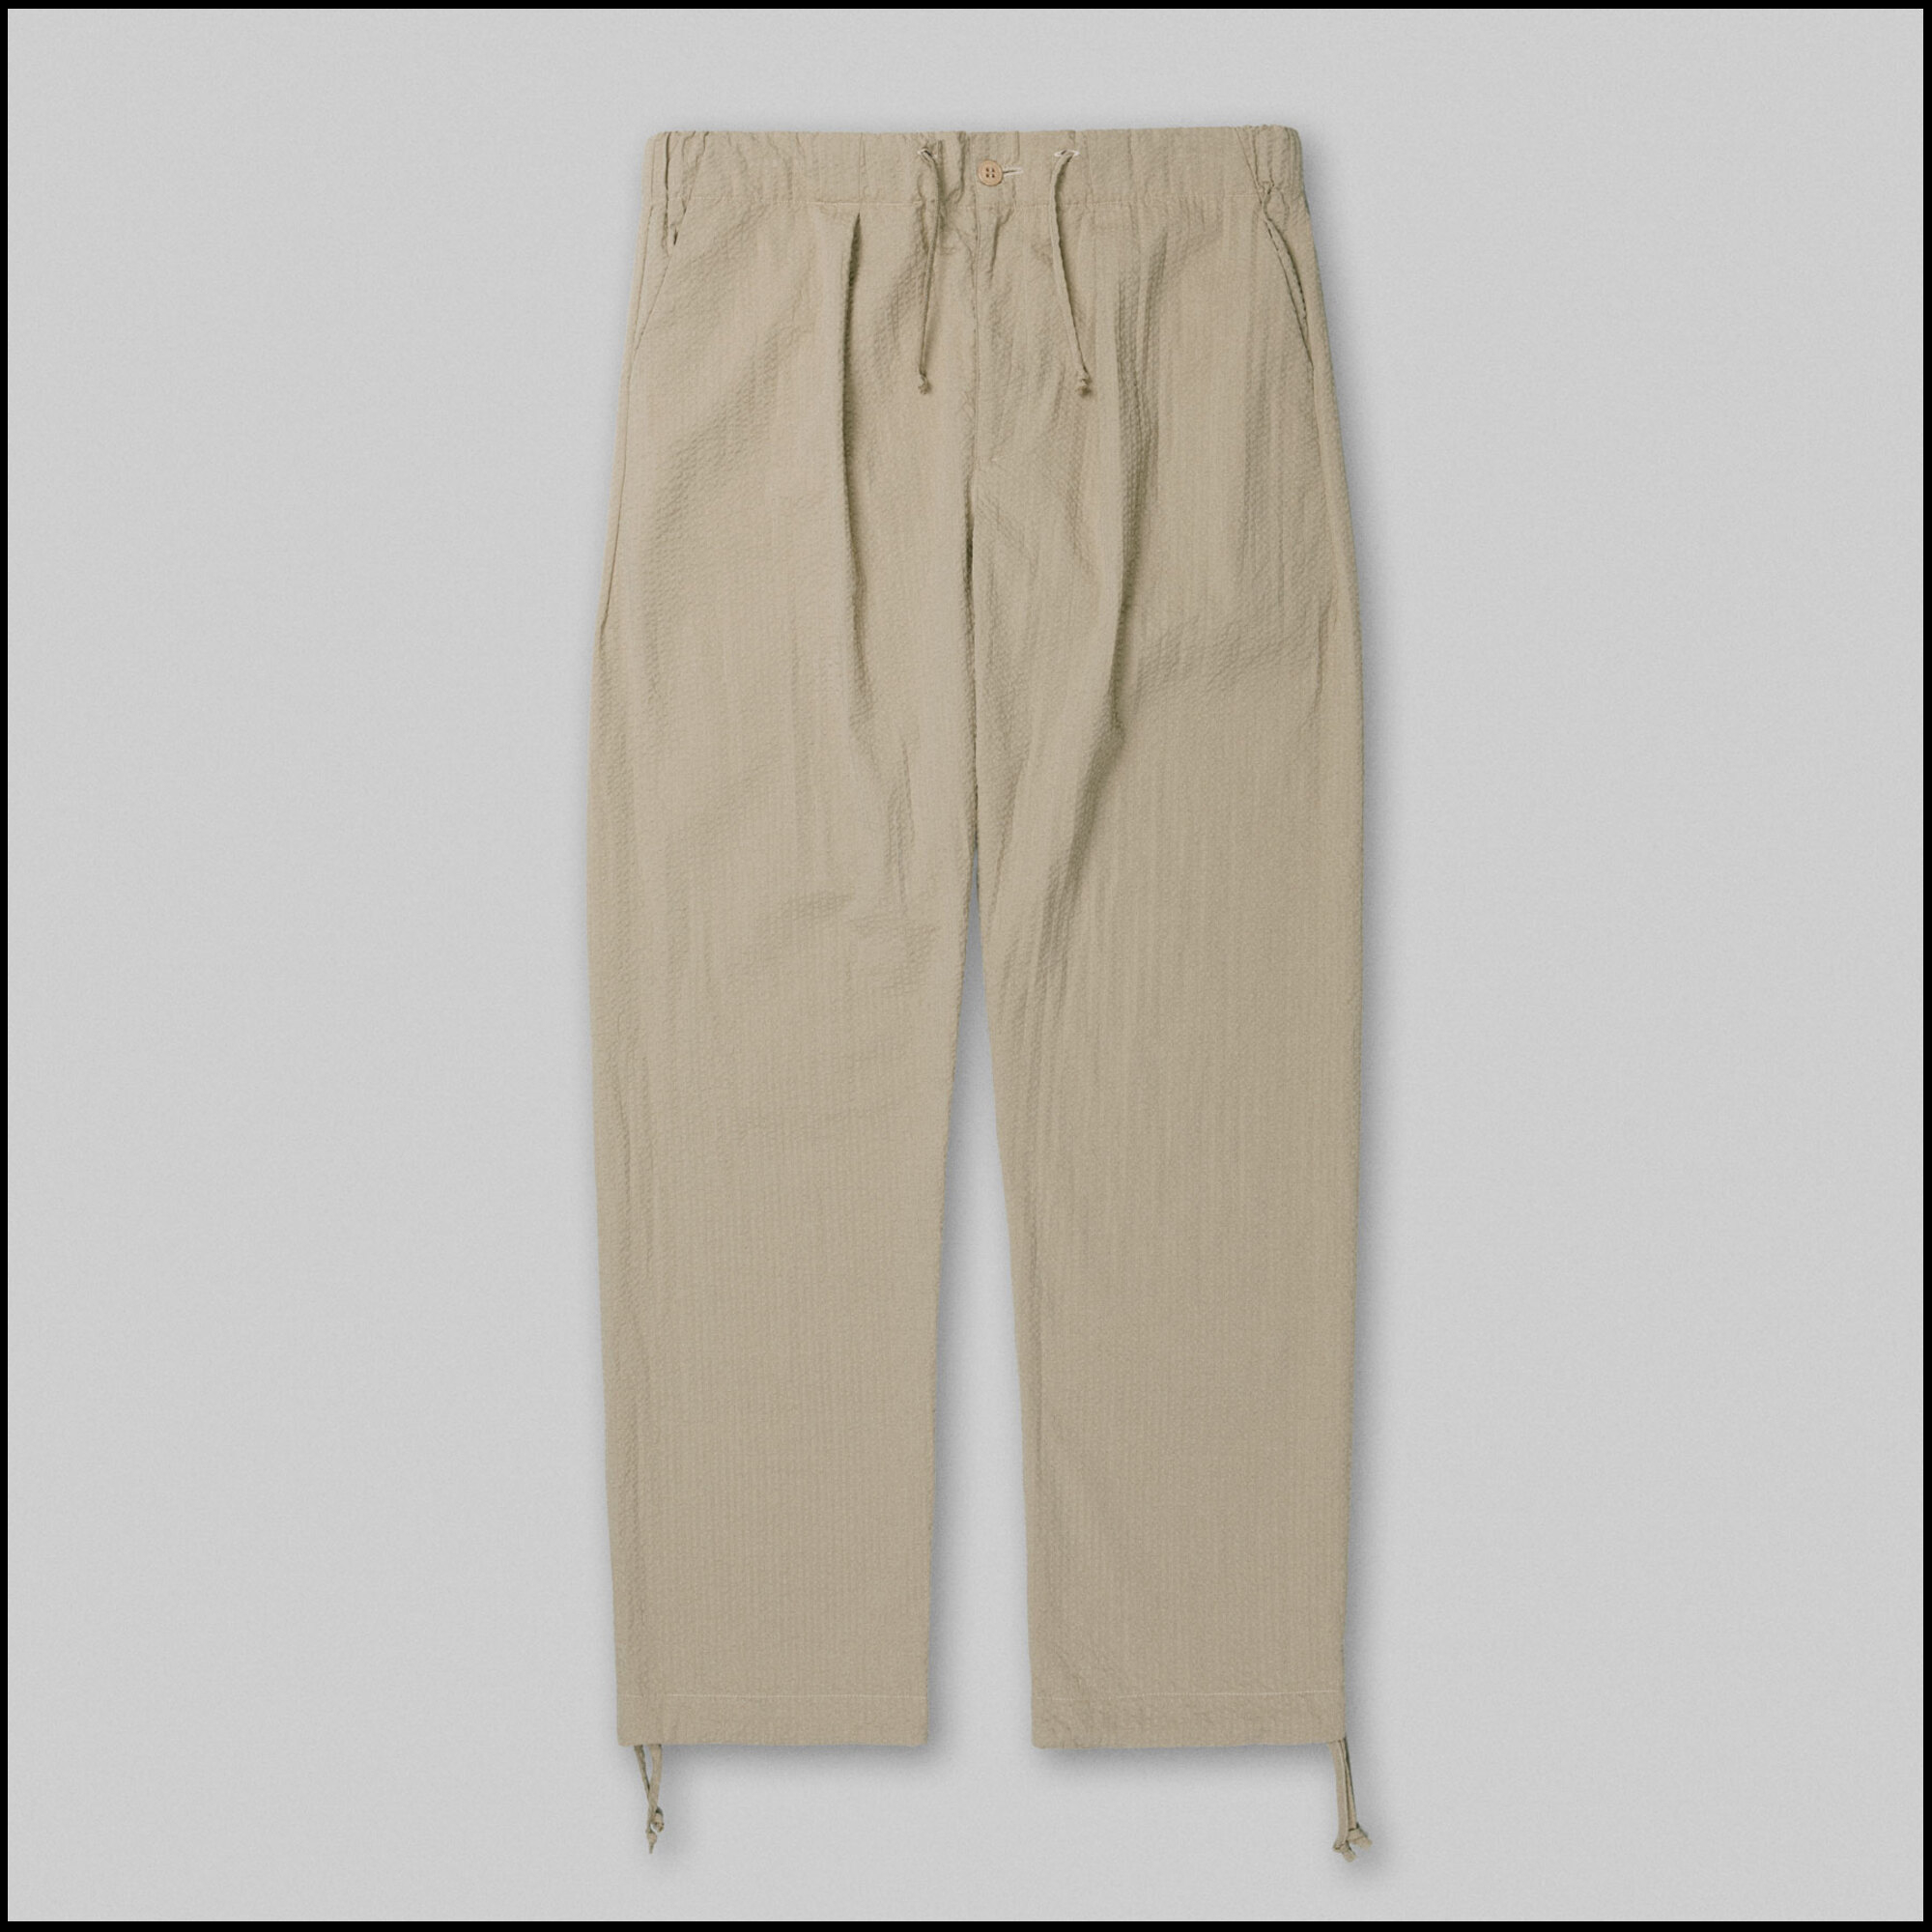 TERRA pants by Arpenteur in Sand color